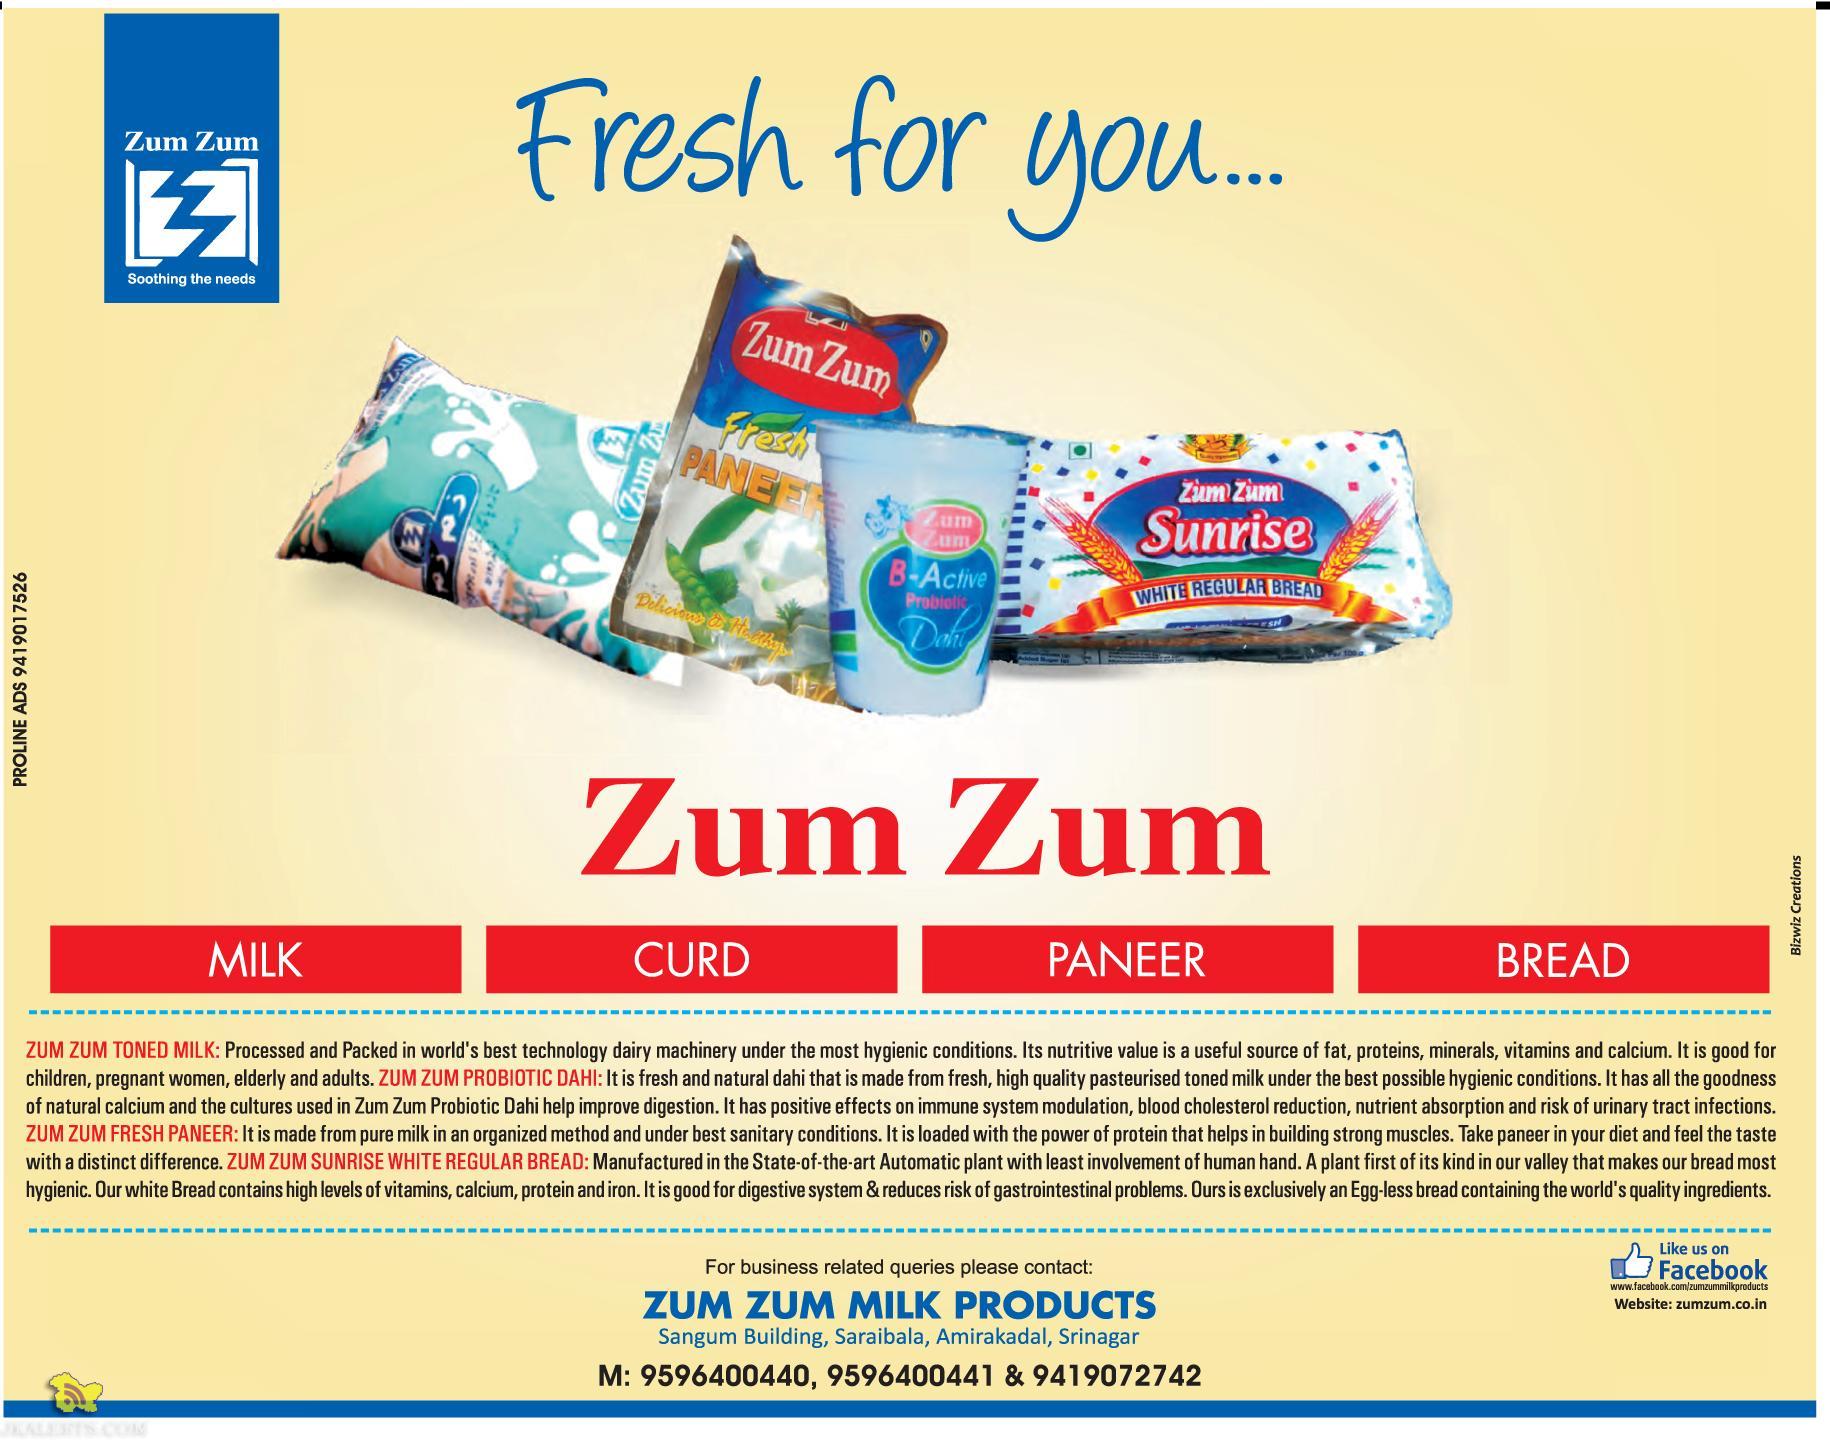 Zum Zum Milk Products for business related Queries